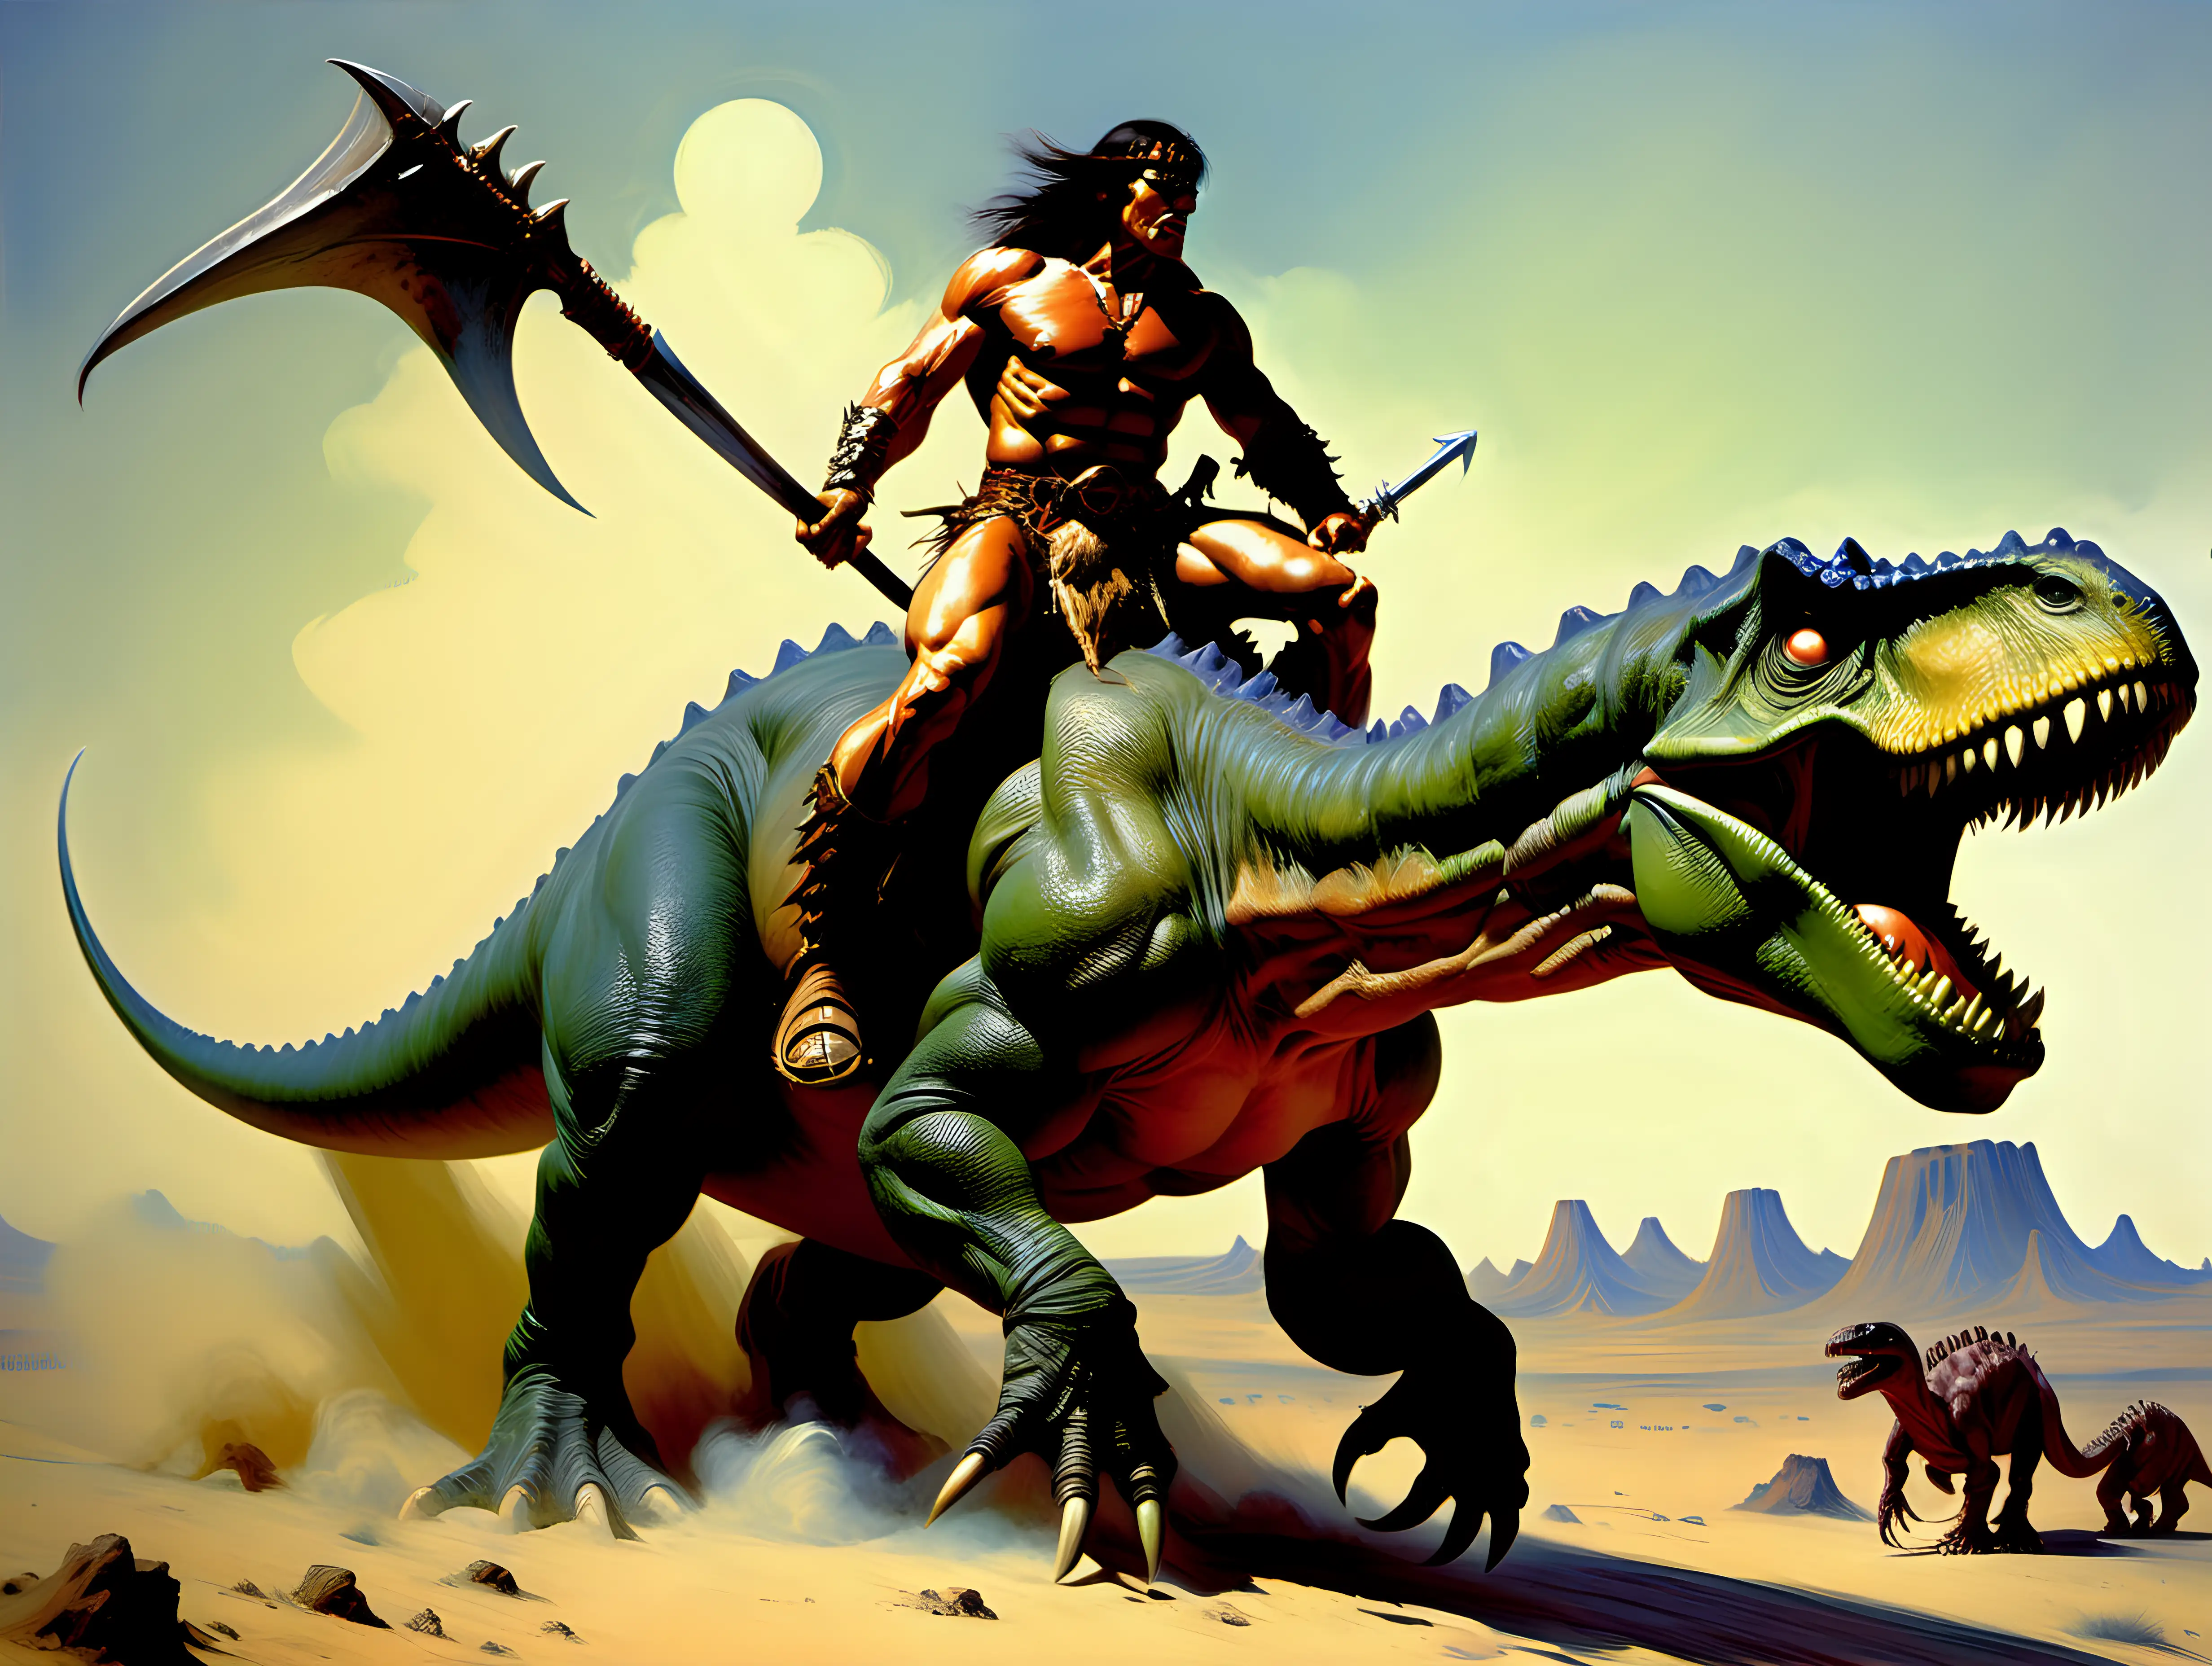 Conan the Barbarian Riding a Dinosaur in Epic Frank Frazetta Style